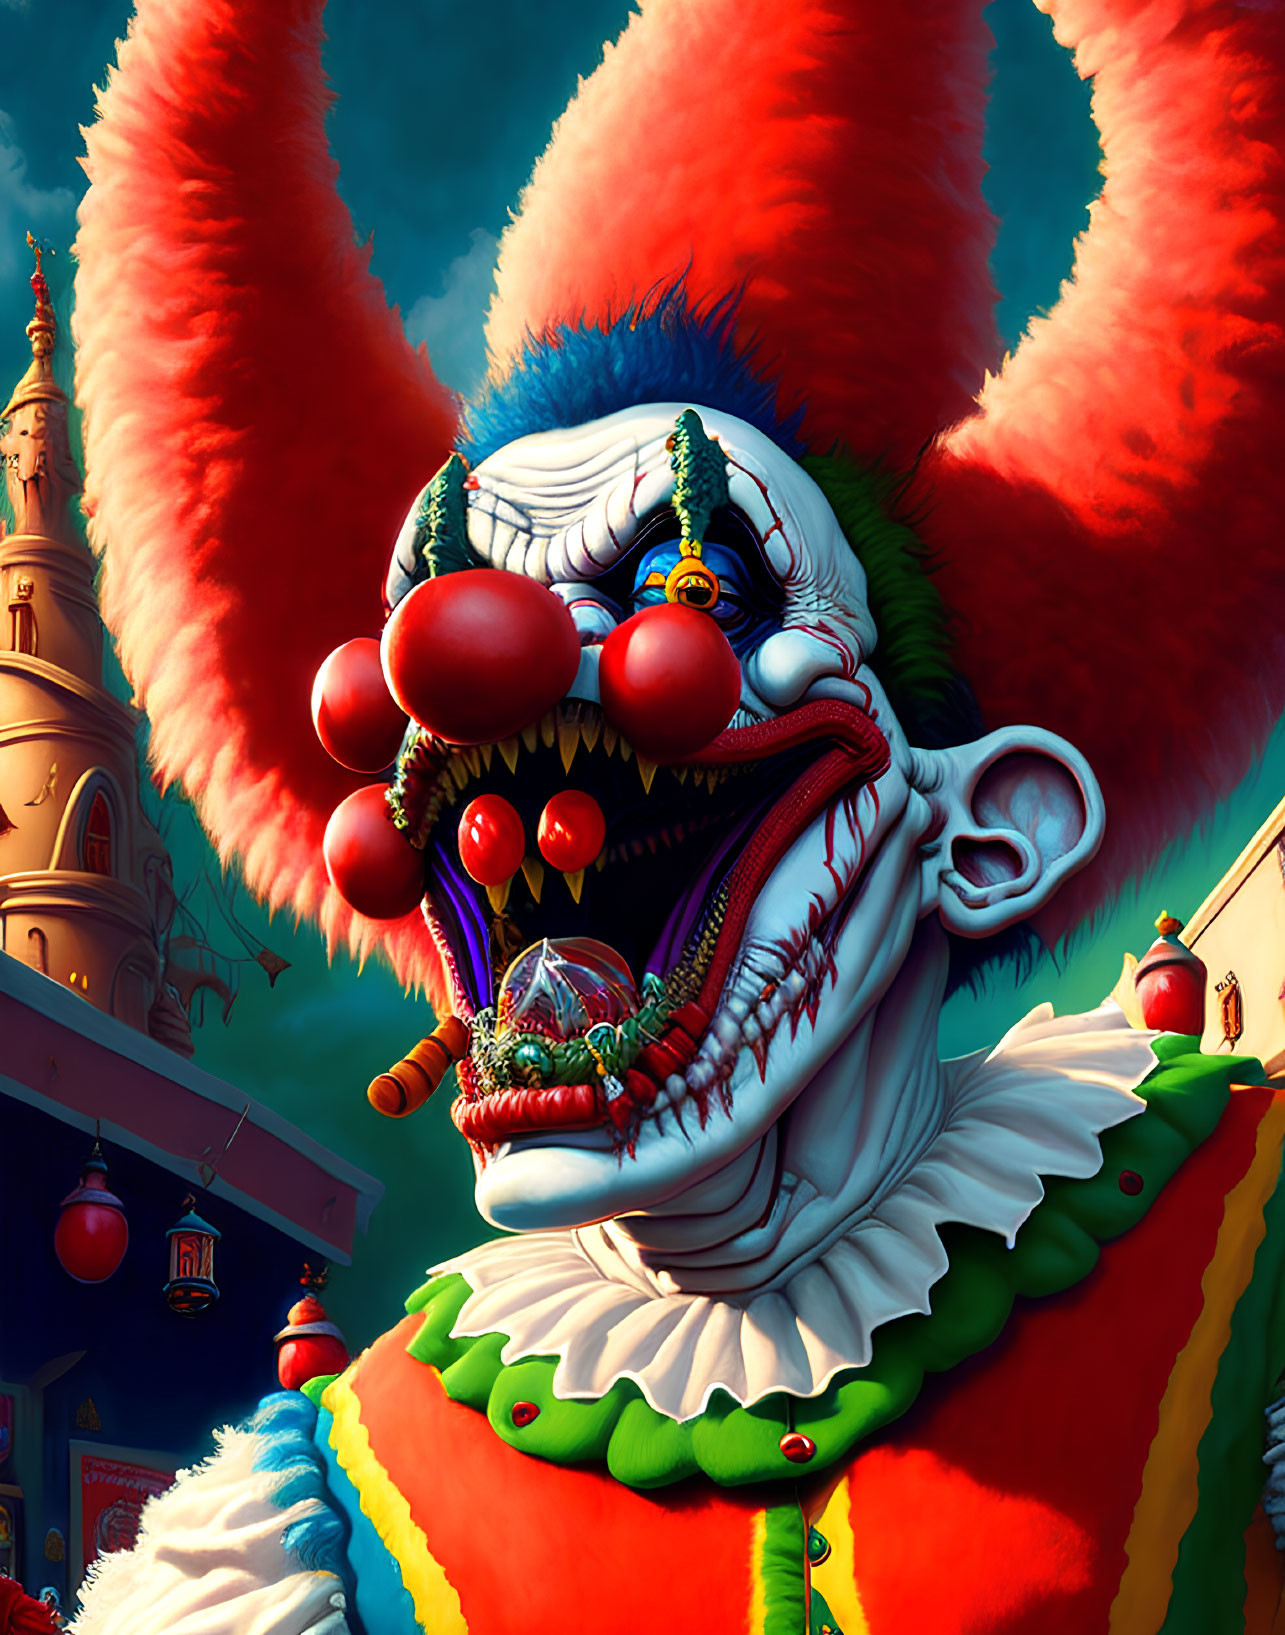 Detailed Illustration of Menacing Clown in Ornate Costume